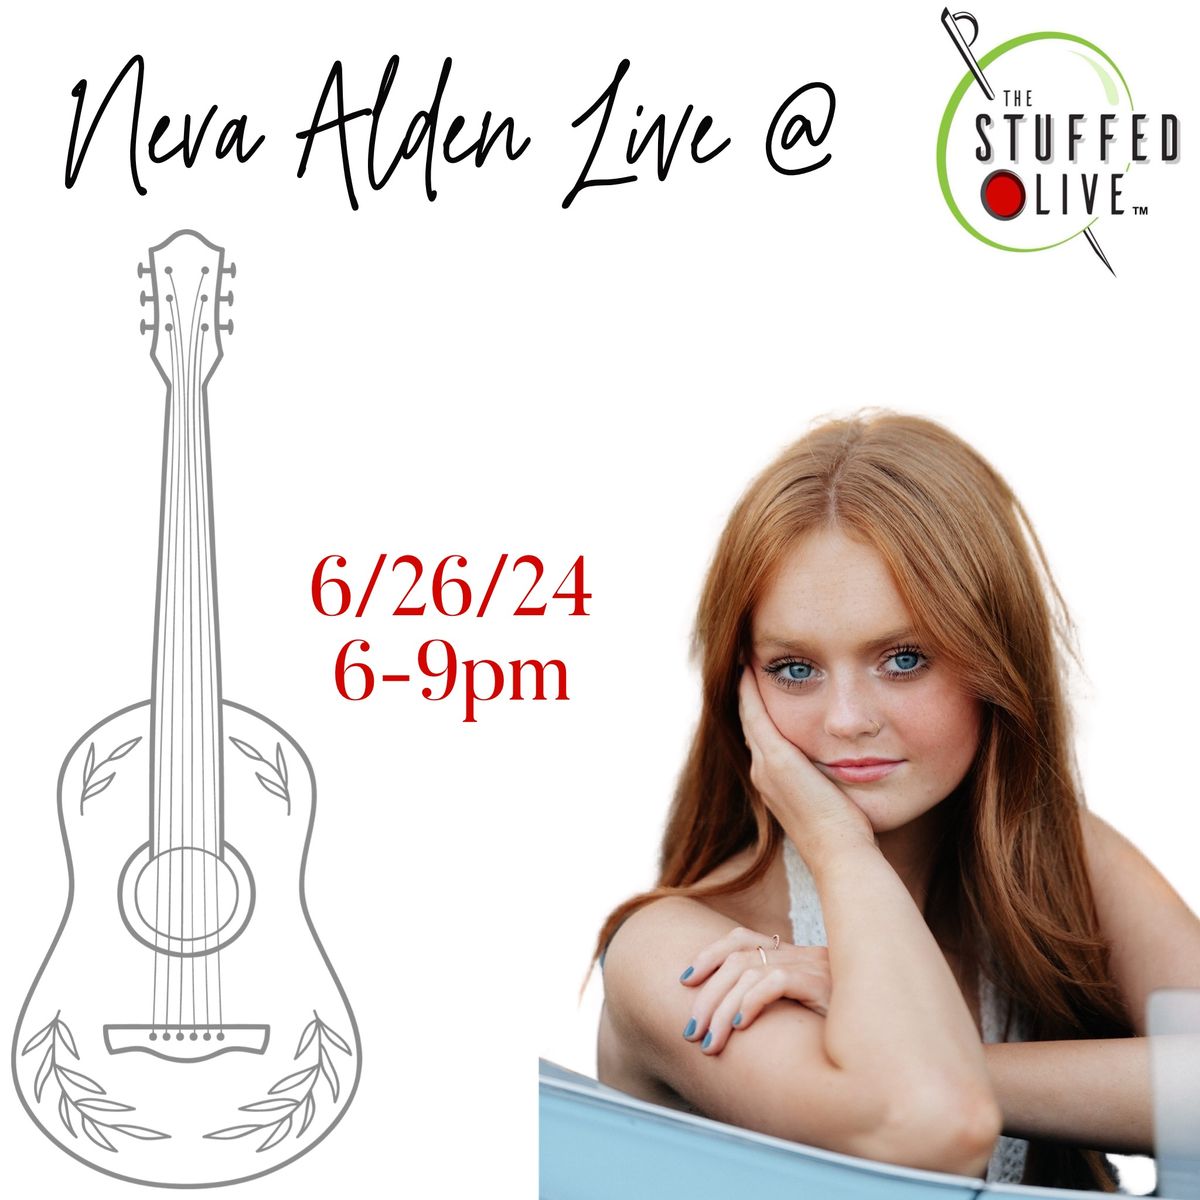 Neva Alden Live @ the Stuffed Olive